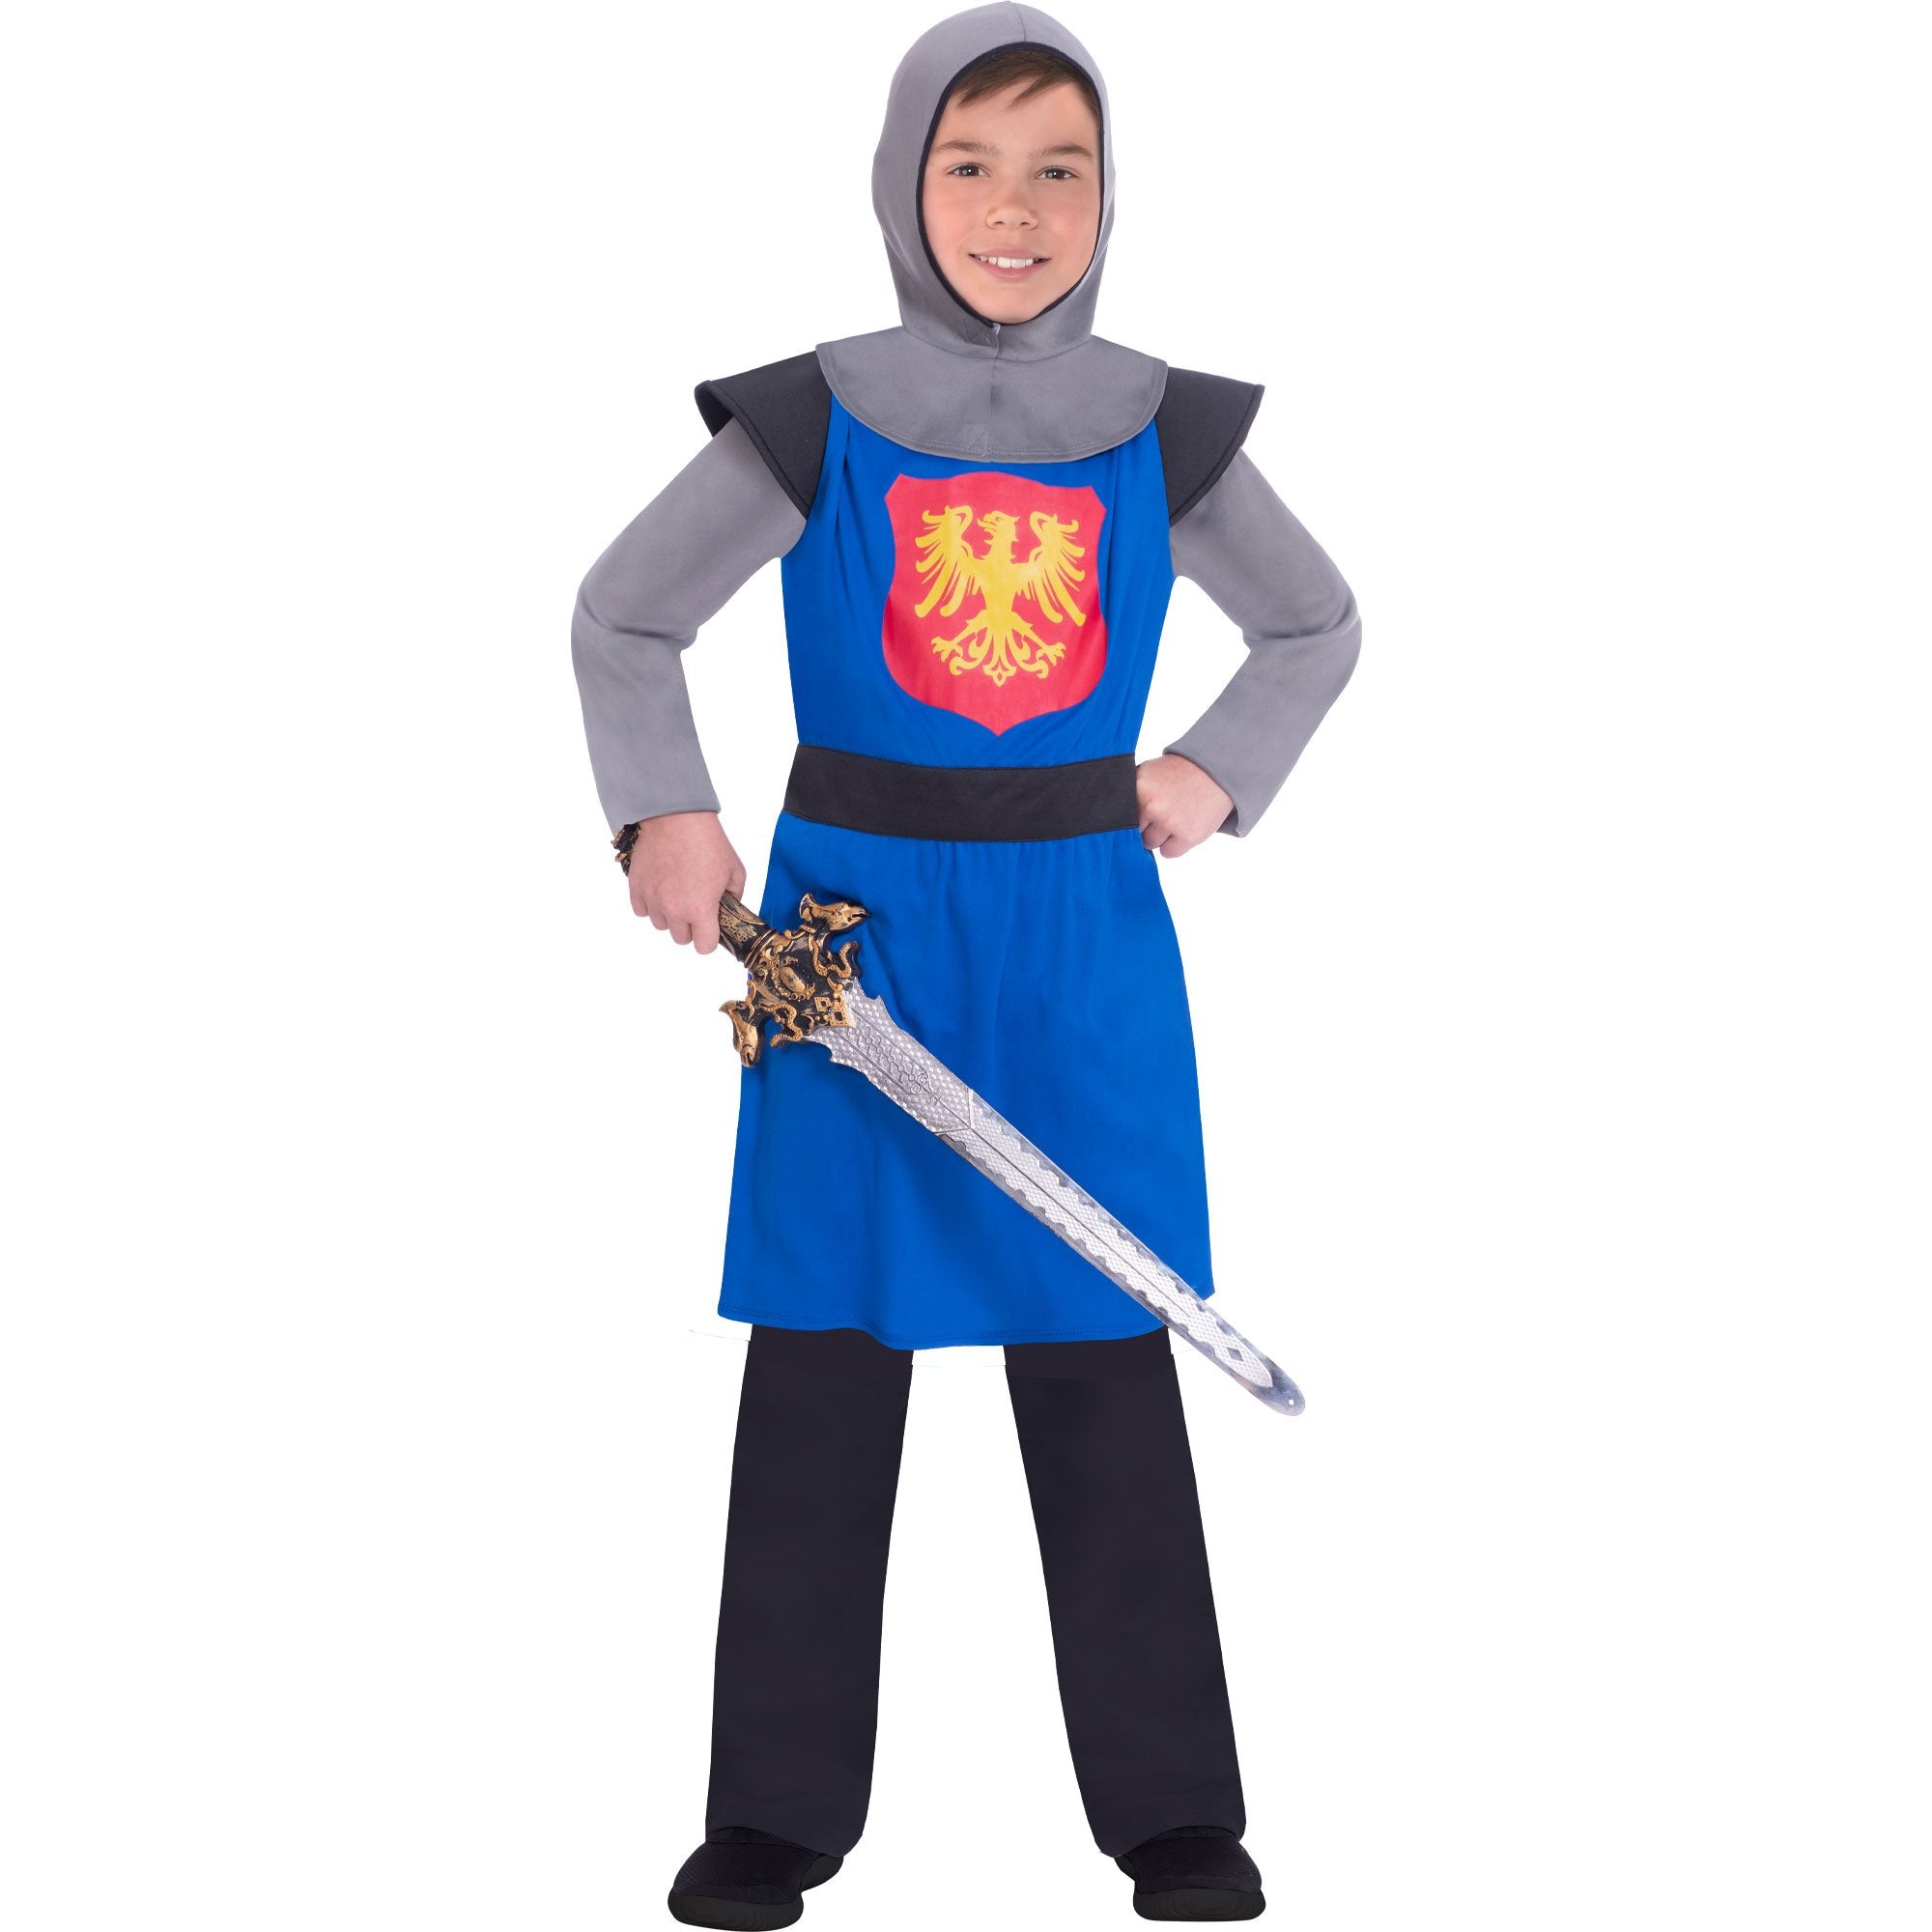 Costume Medieval Knight Blue - Kids